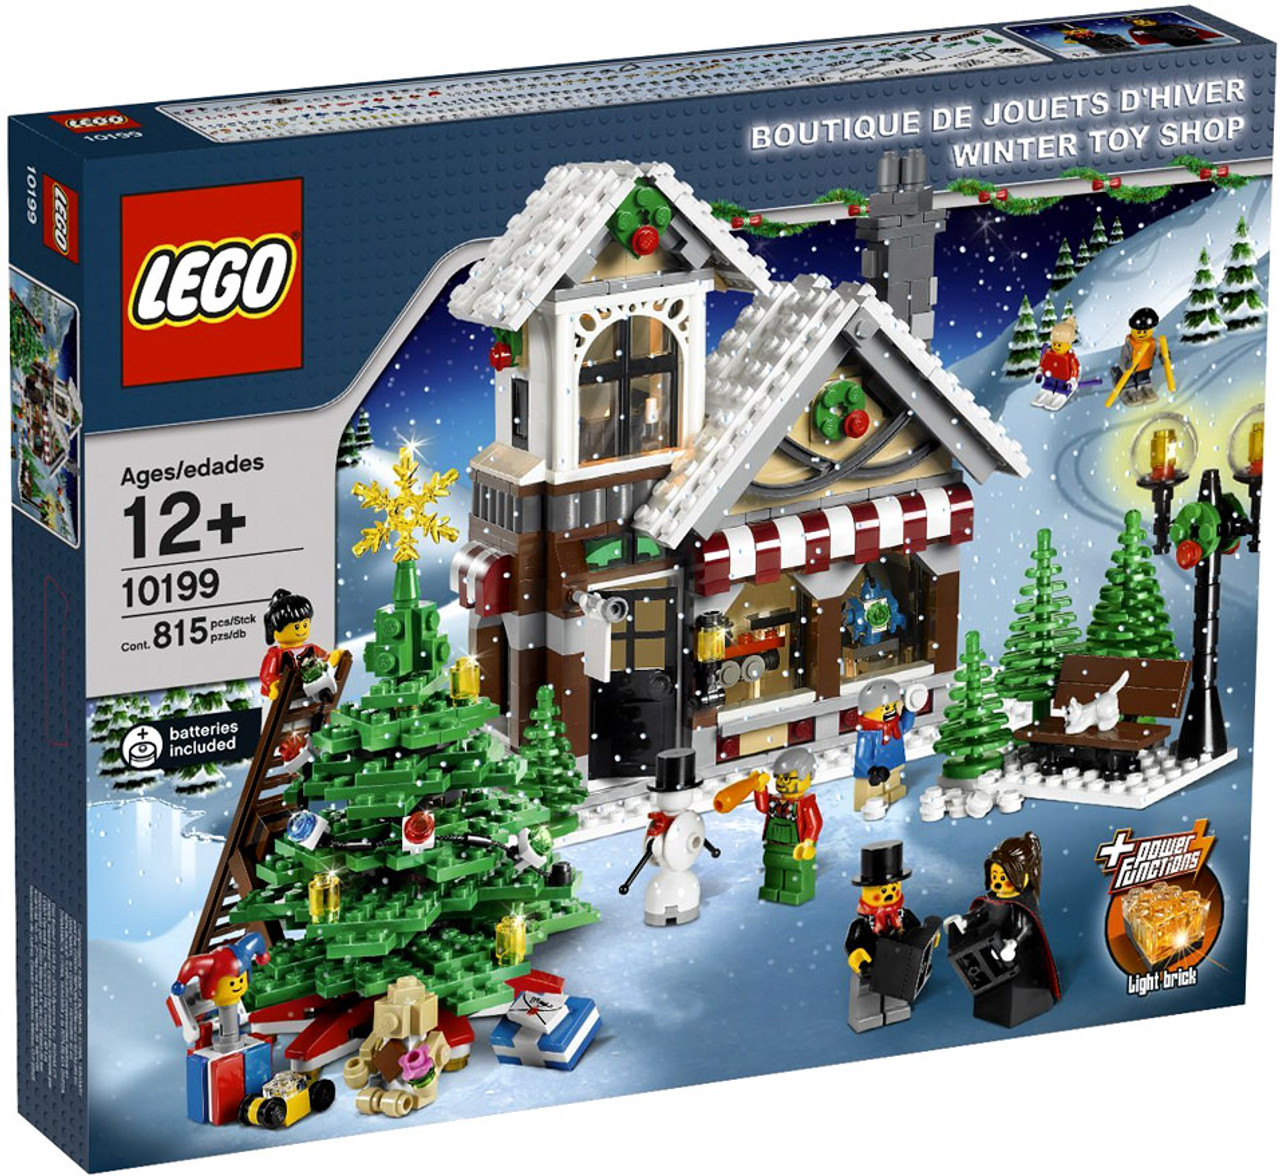 LEGO Christmas Winter Village Winter Toy Shop Exclusive Set 10199